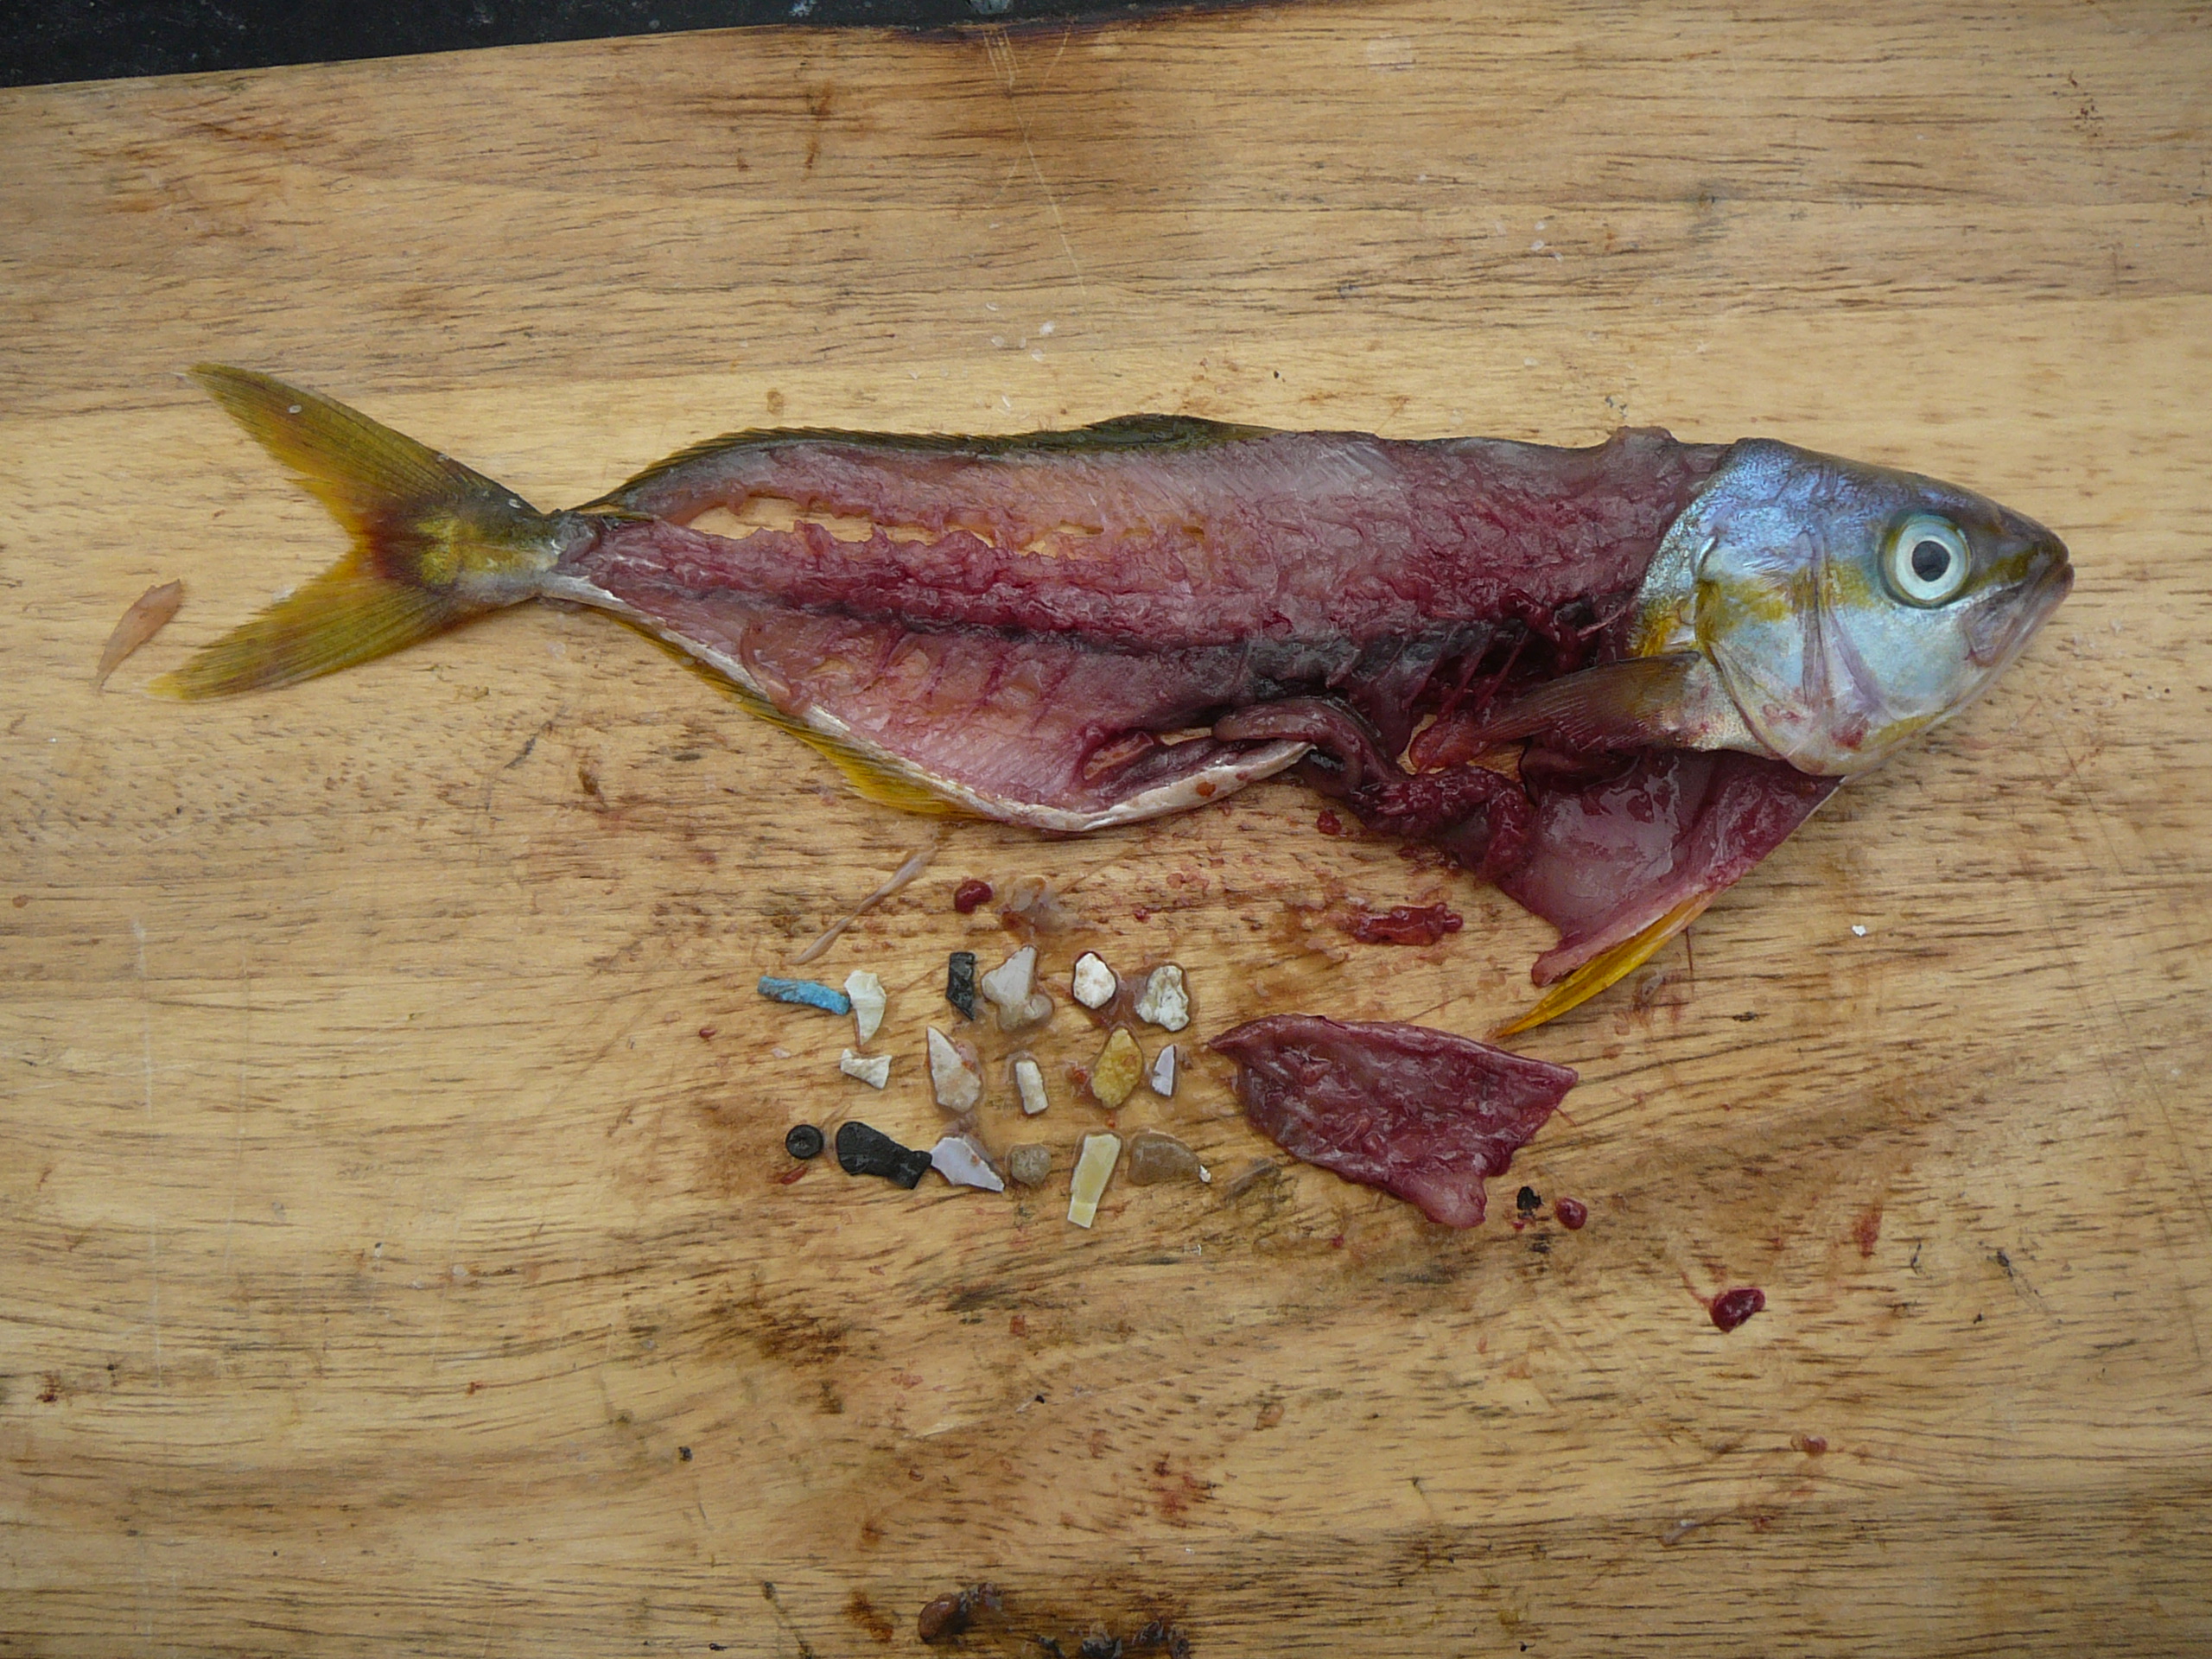 Fisk med plastbiter i kroppen